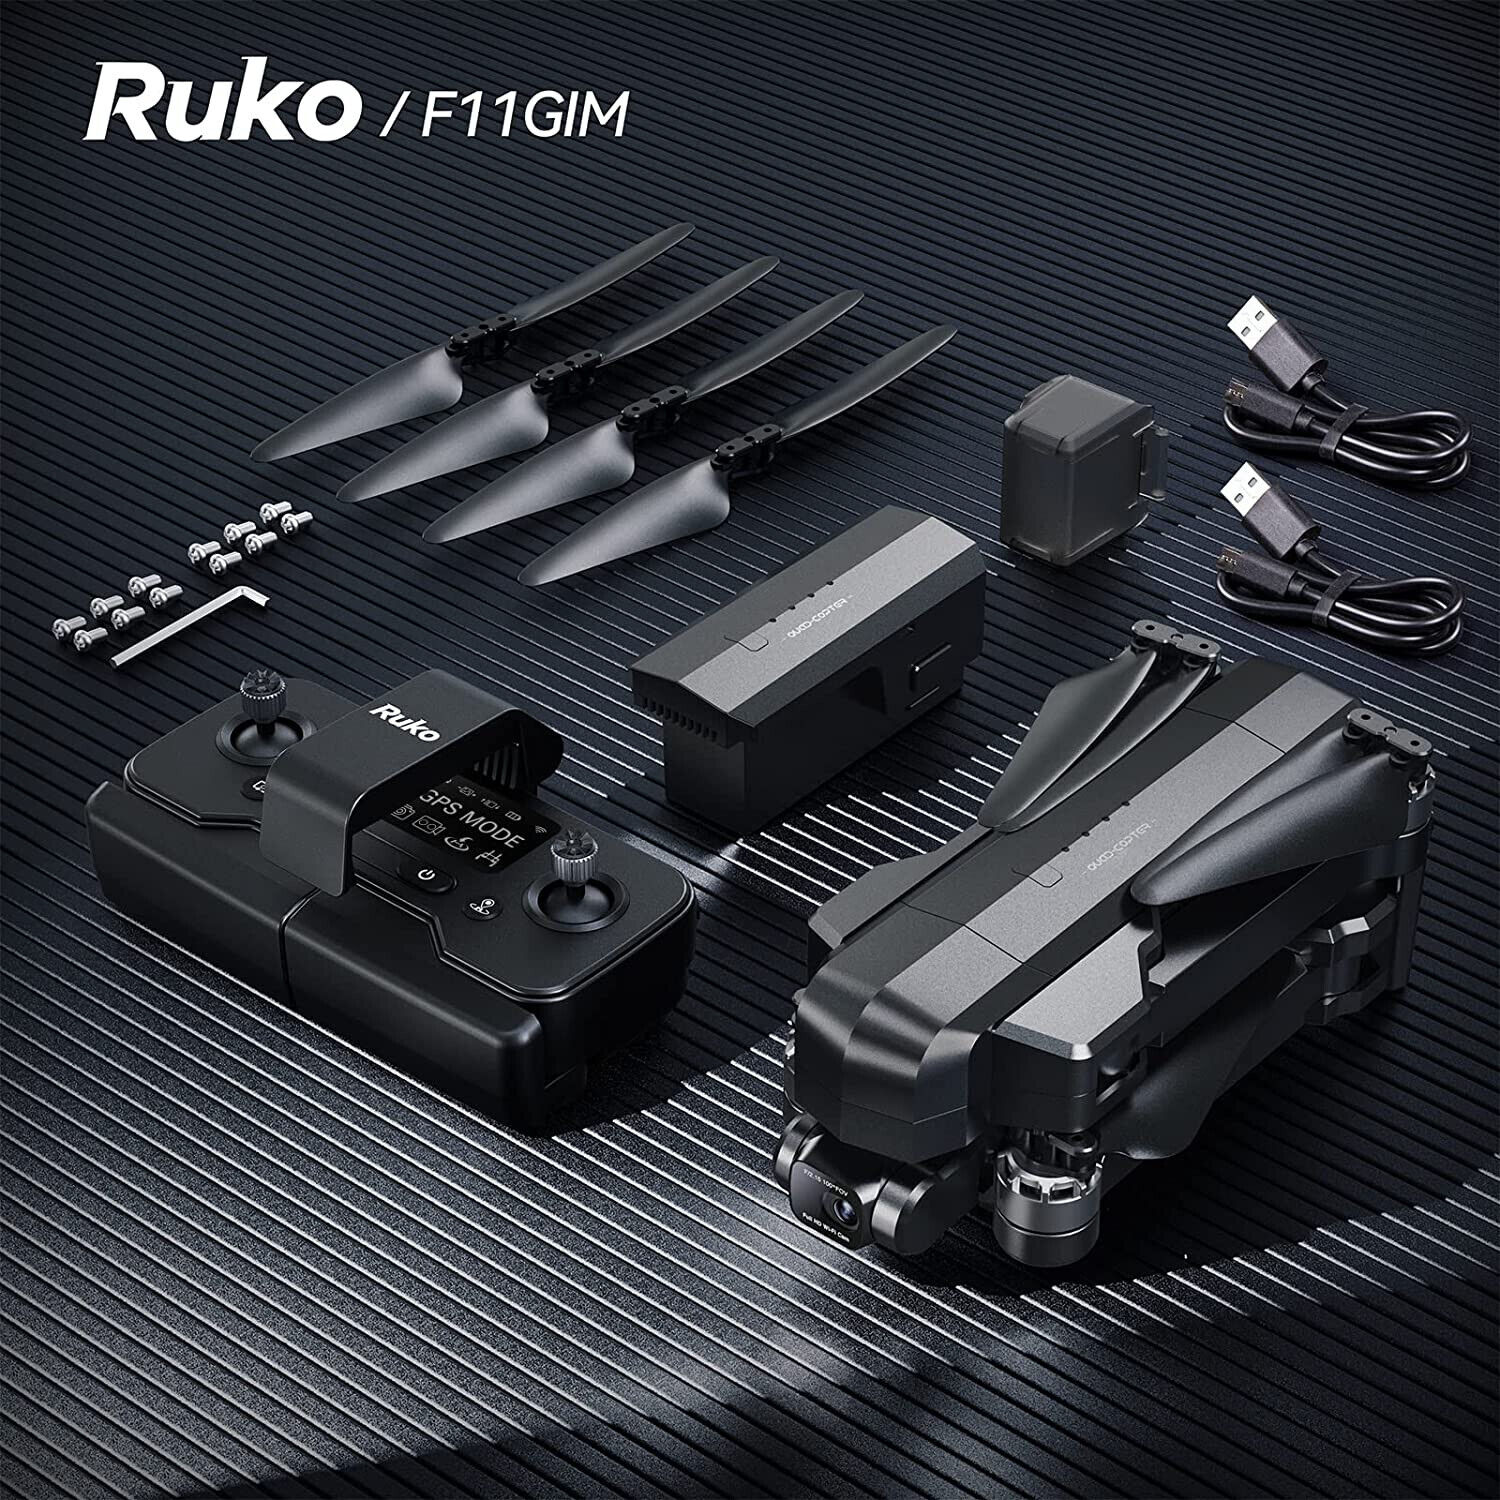 Ruko F11GIM Camera Drones for Adults